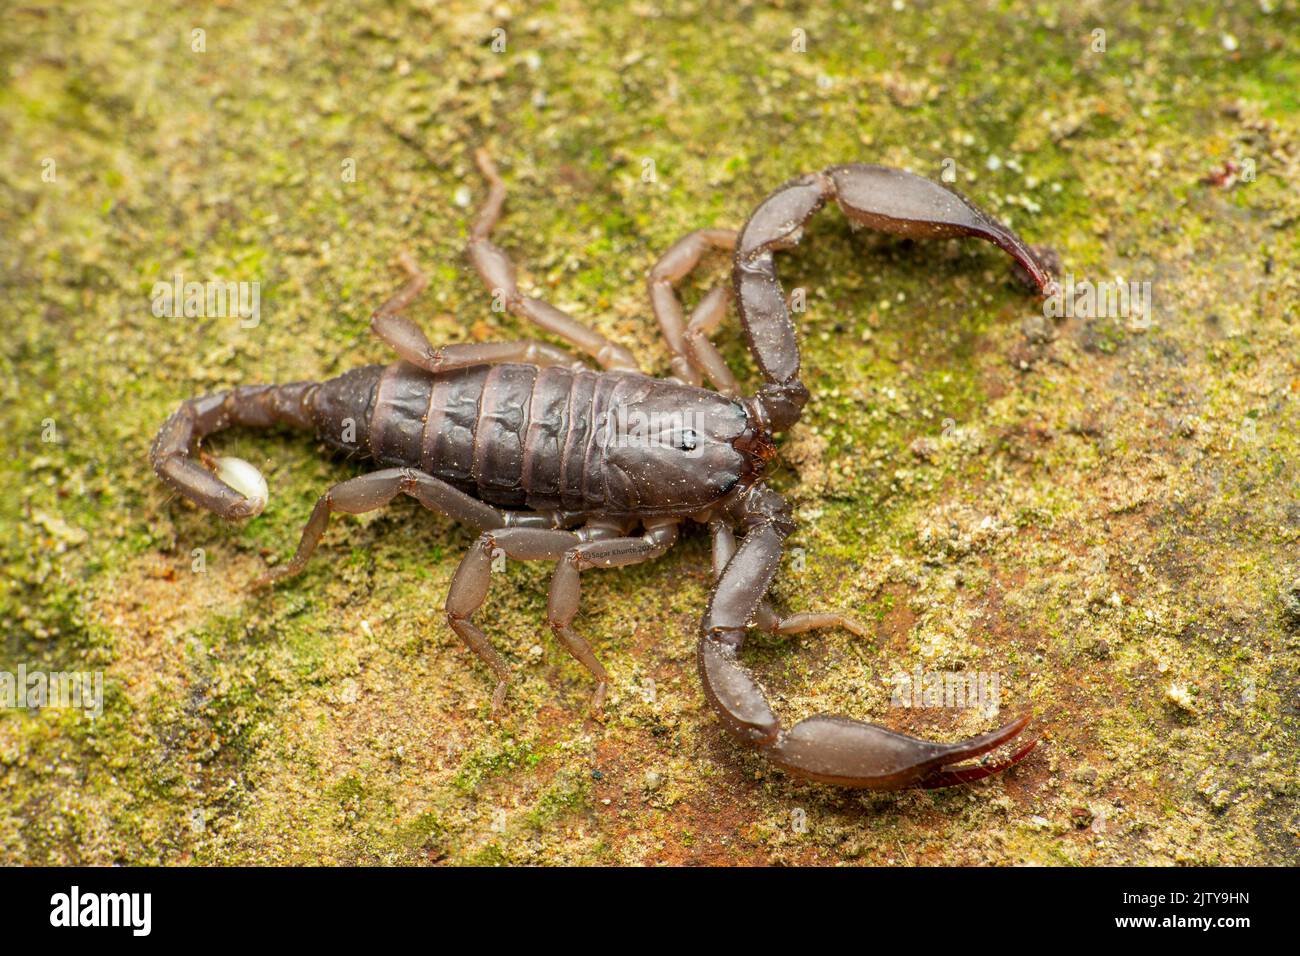 Recently described Phaltans scorpion, Neoscorpiops phaltanensis, Satara, Maharashtra, India Stock Photo